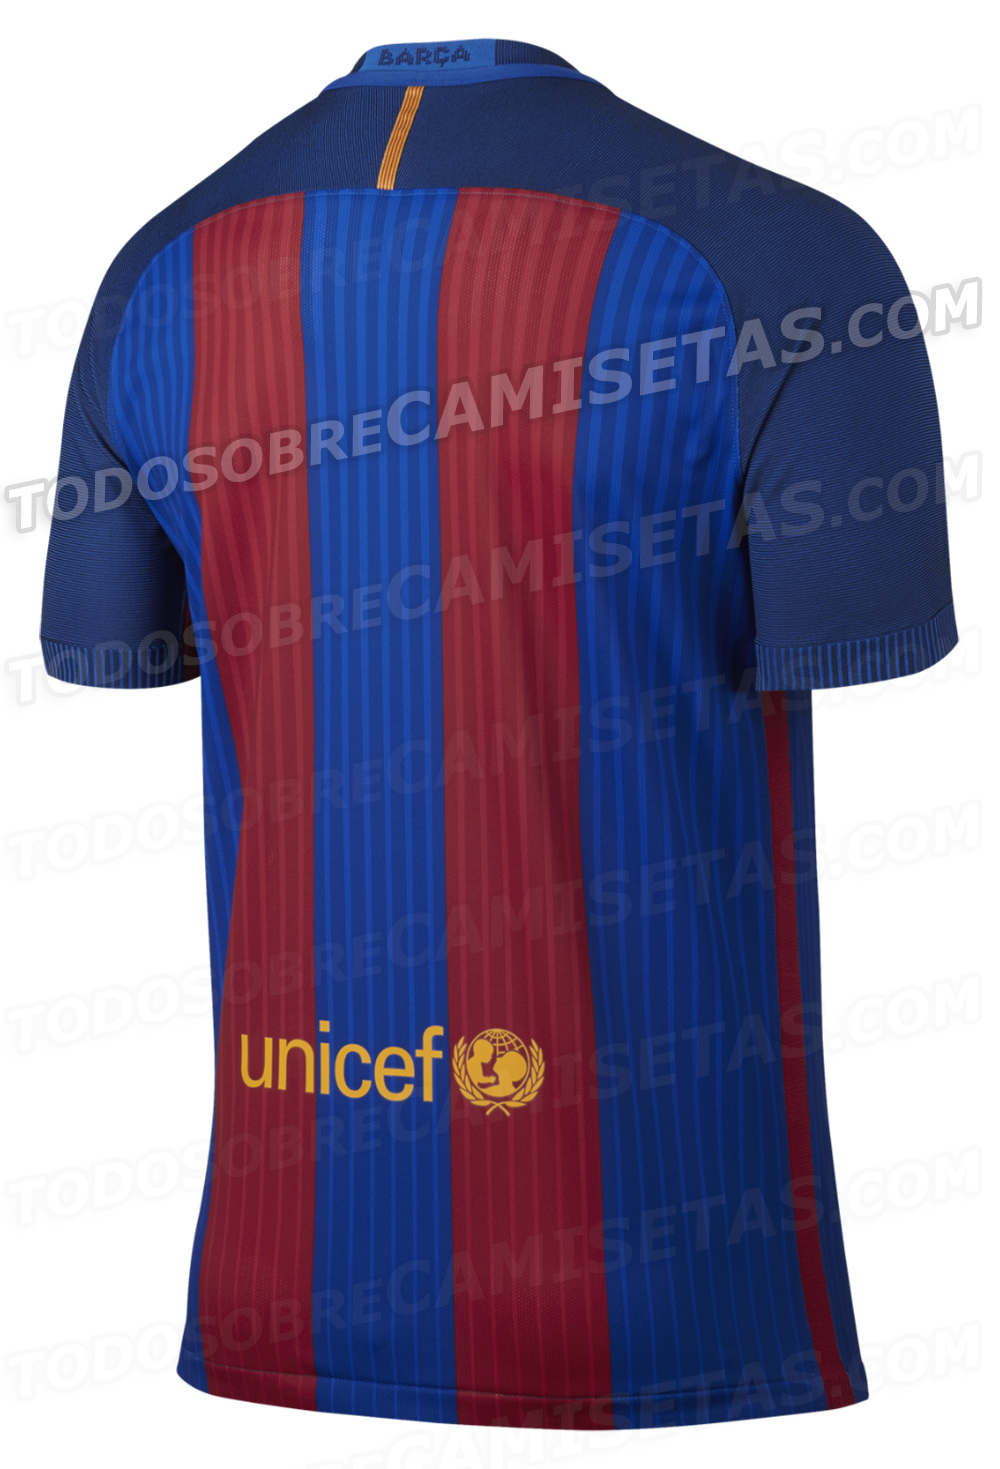 Camiseta Nike de Barcelona 2016-17